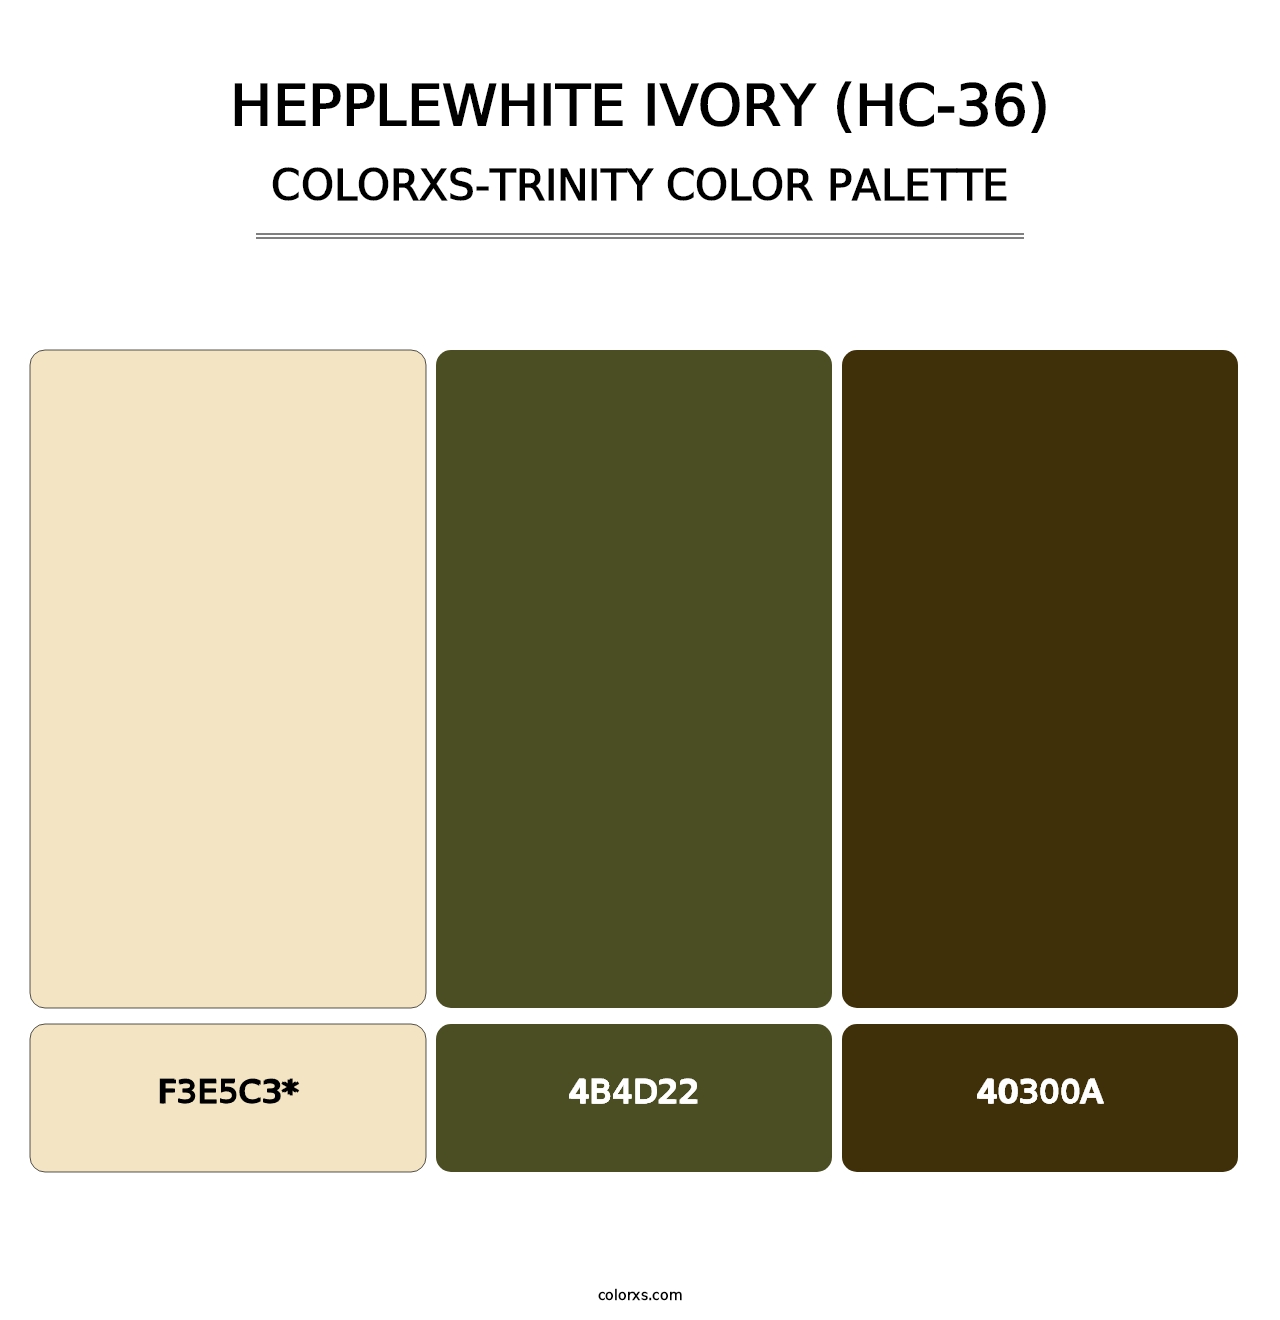 Hepplewhite Ivory (HC-36) - Colorxs Trinity Palette